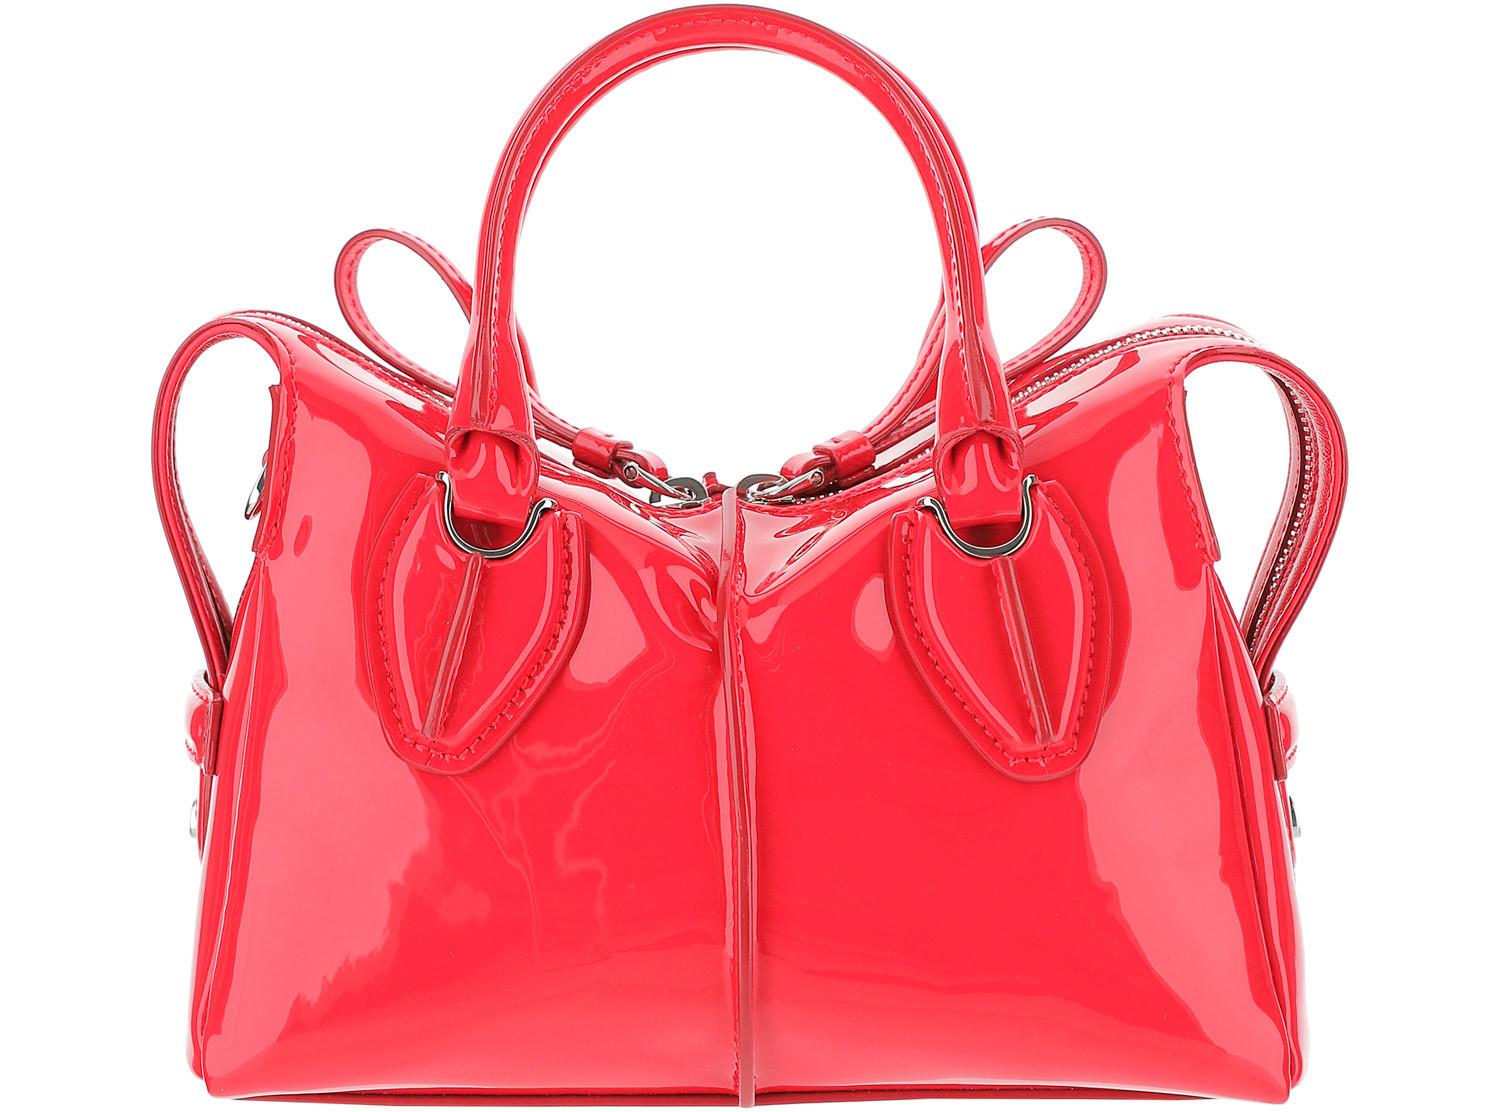 Red Patent Small Handbag